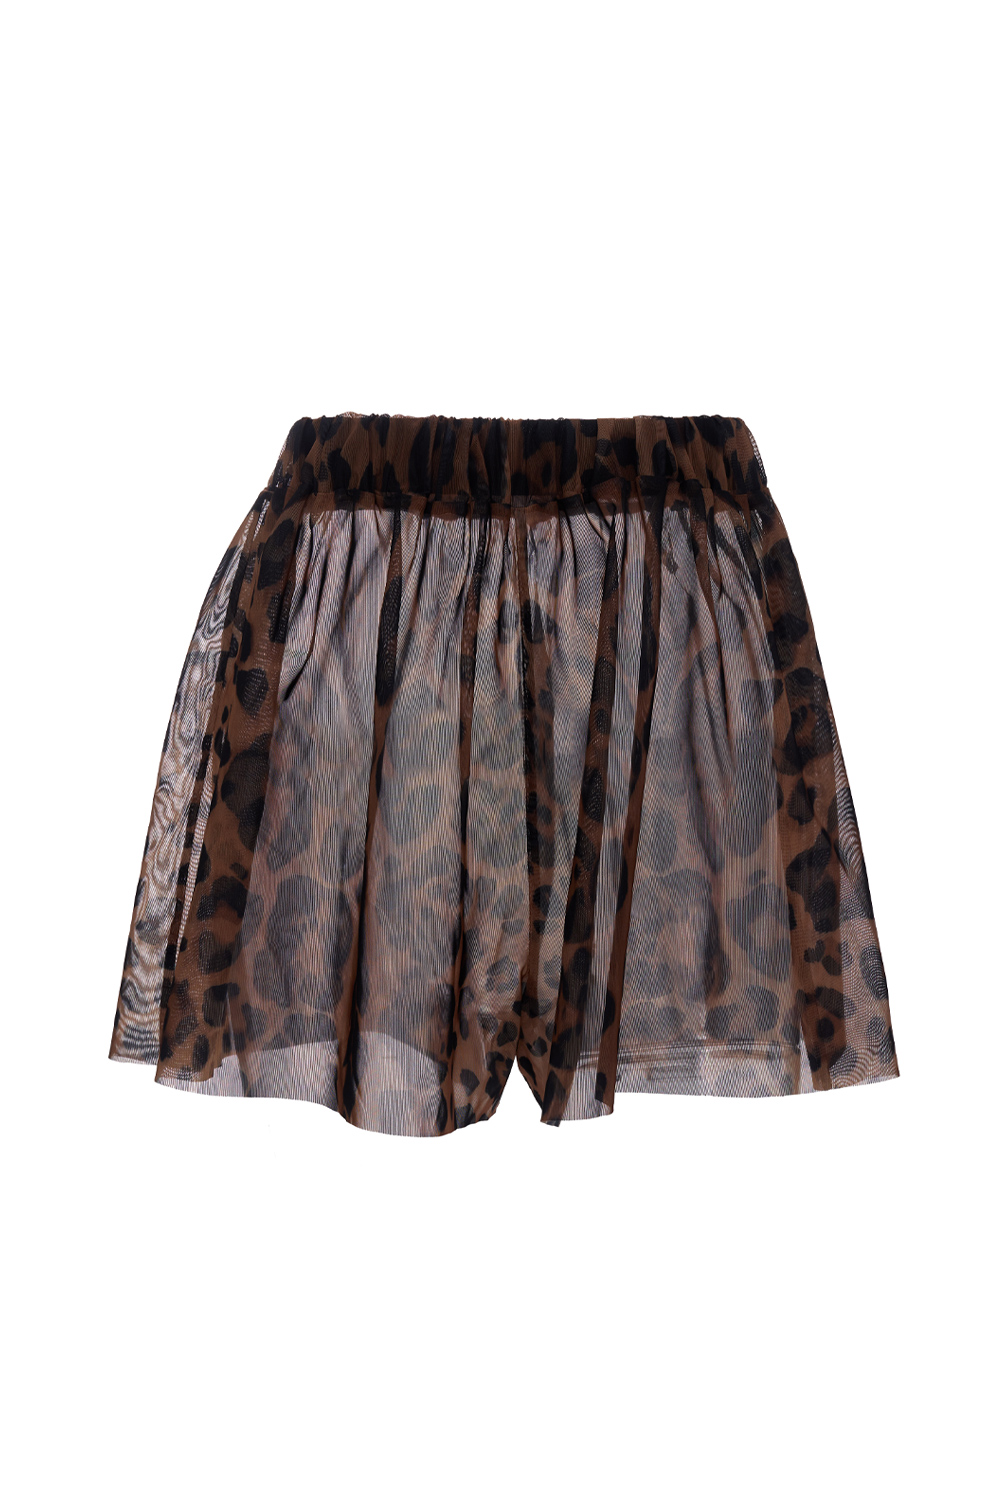 Shorts, mesh, "Leopard Natural" print 